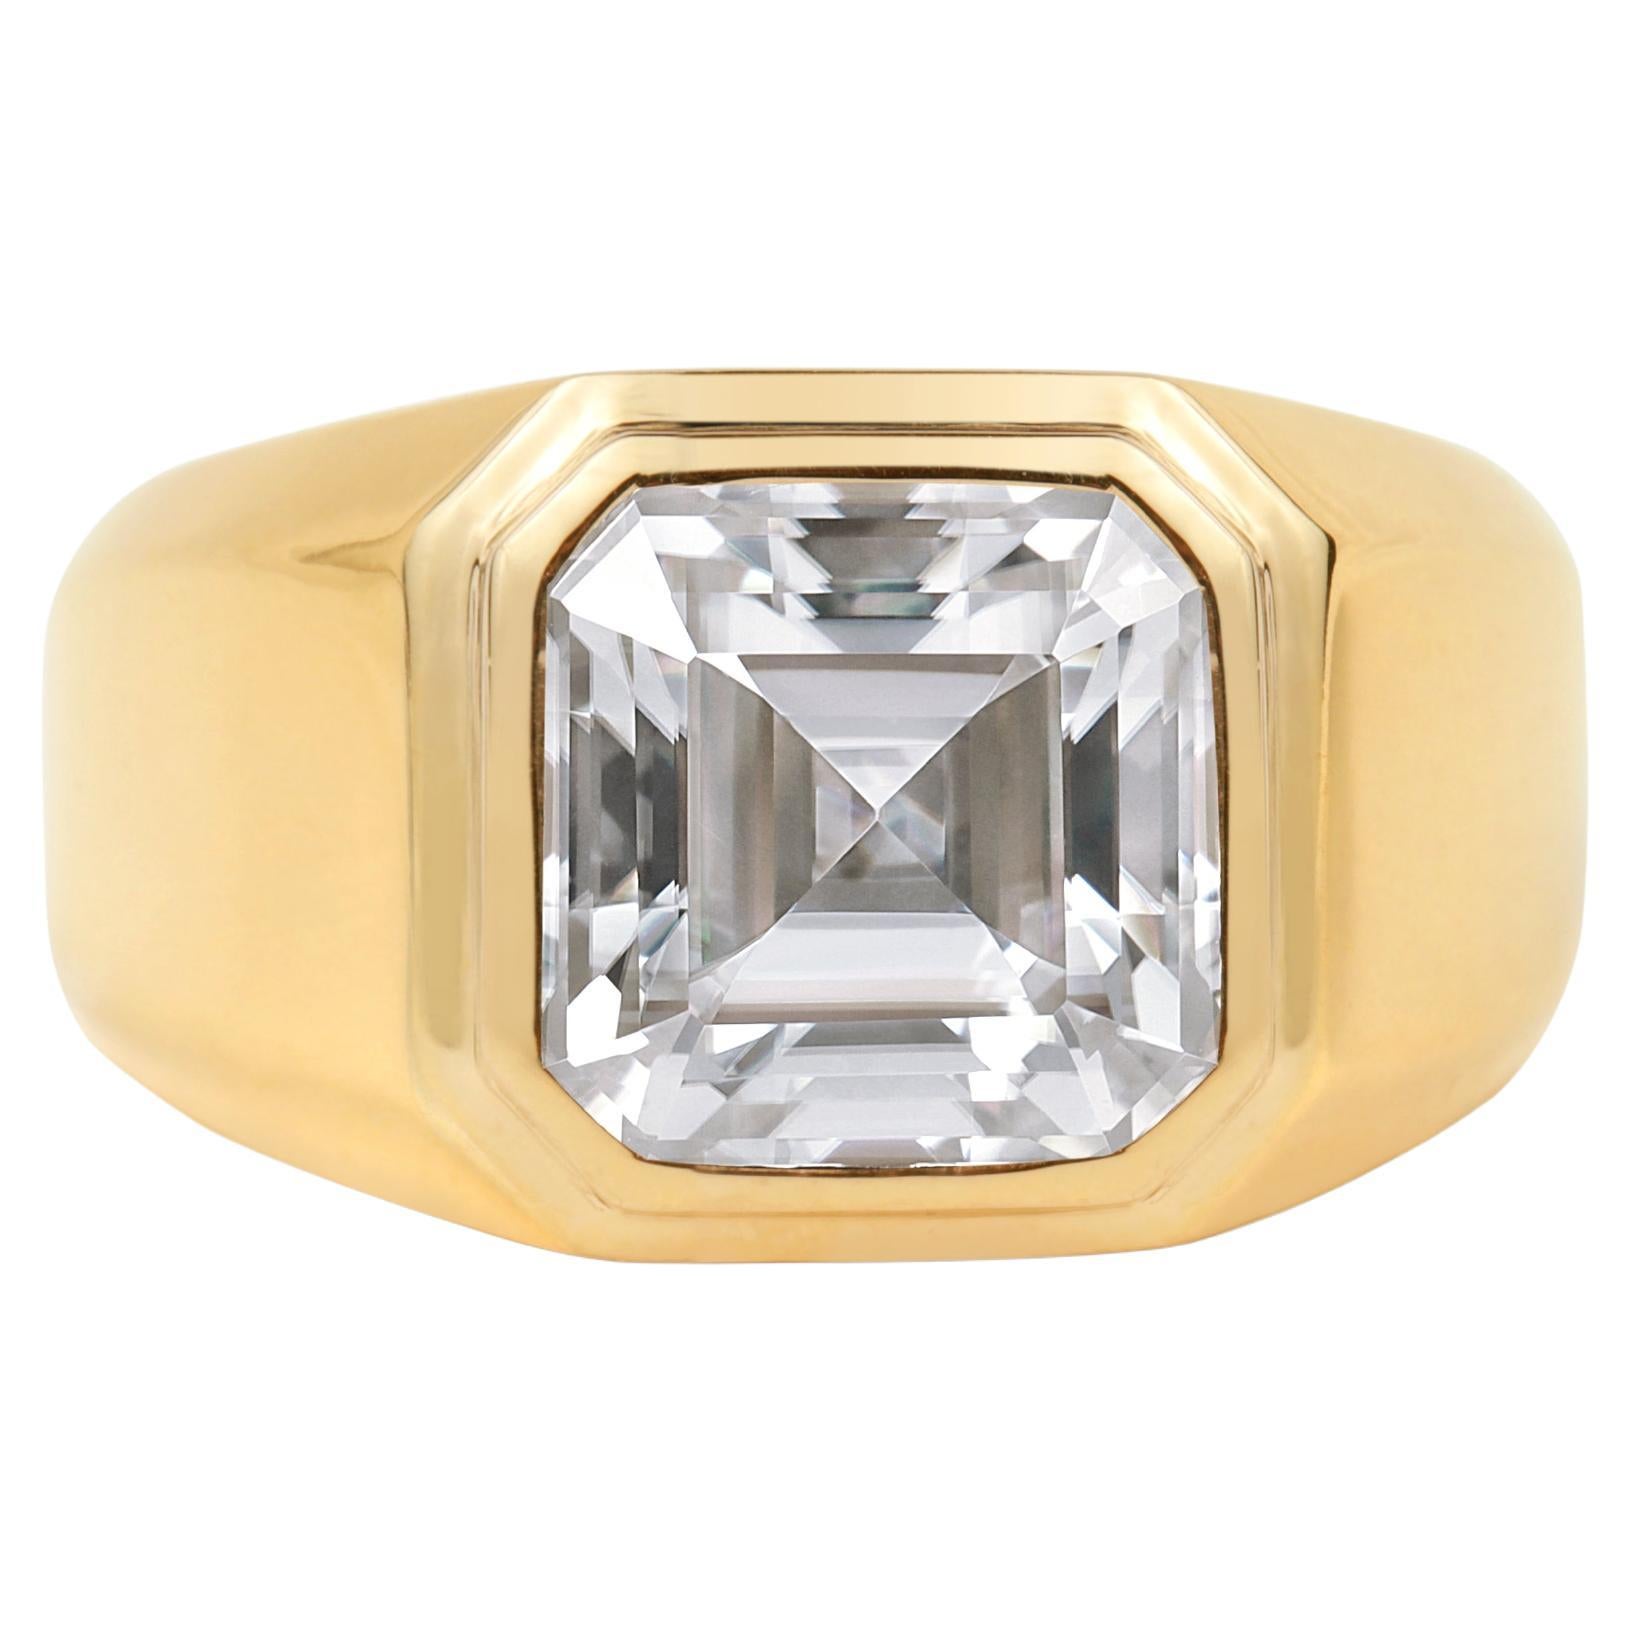 GIA Report Certified 3 Carat Asscher Cut Diamond in 18k Yellow Gold Signet Ring 